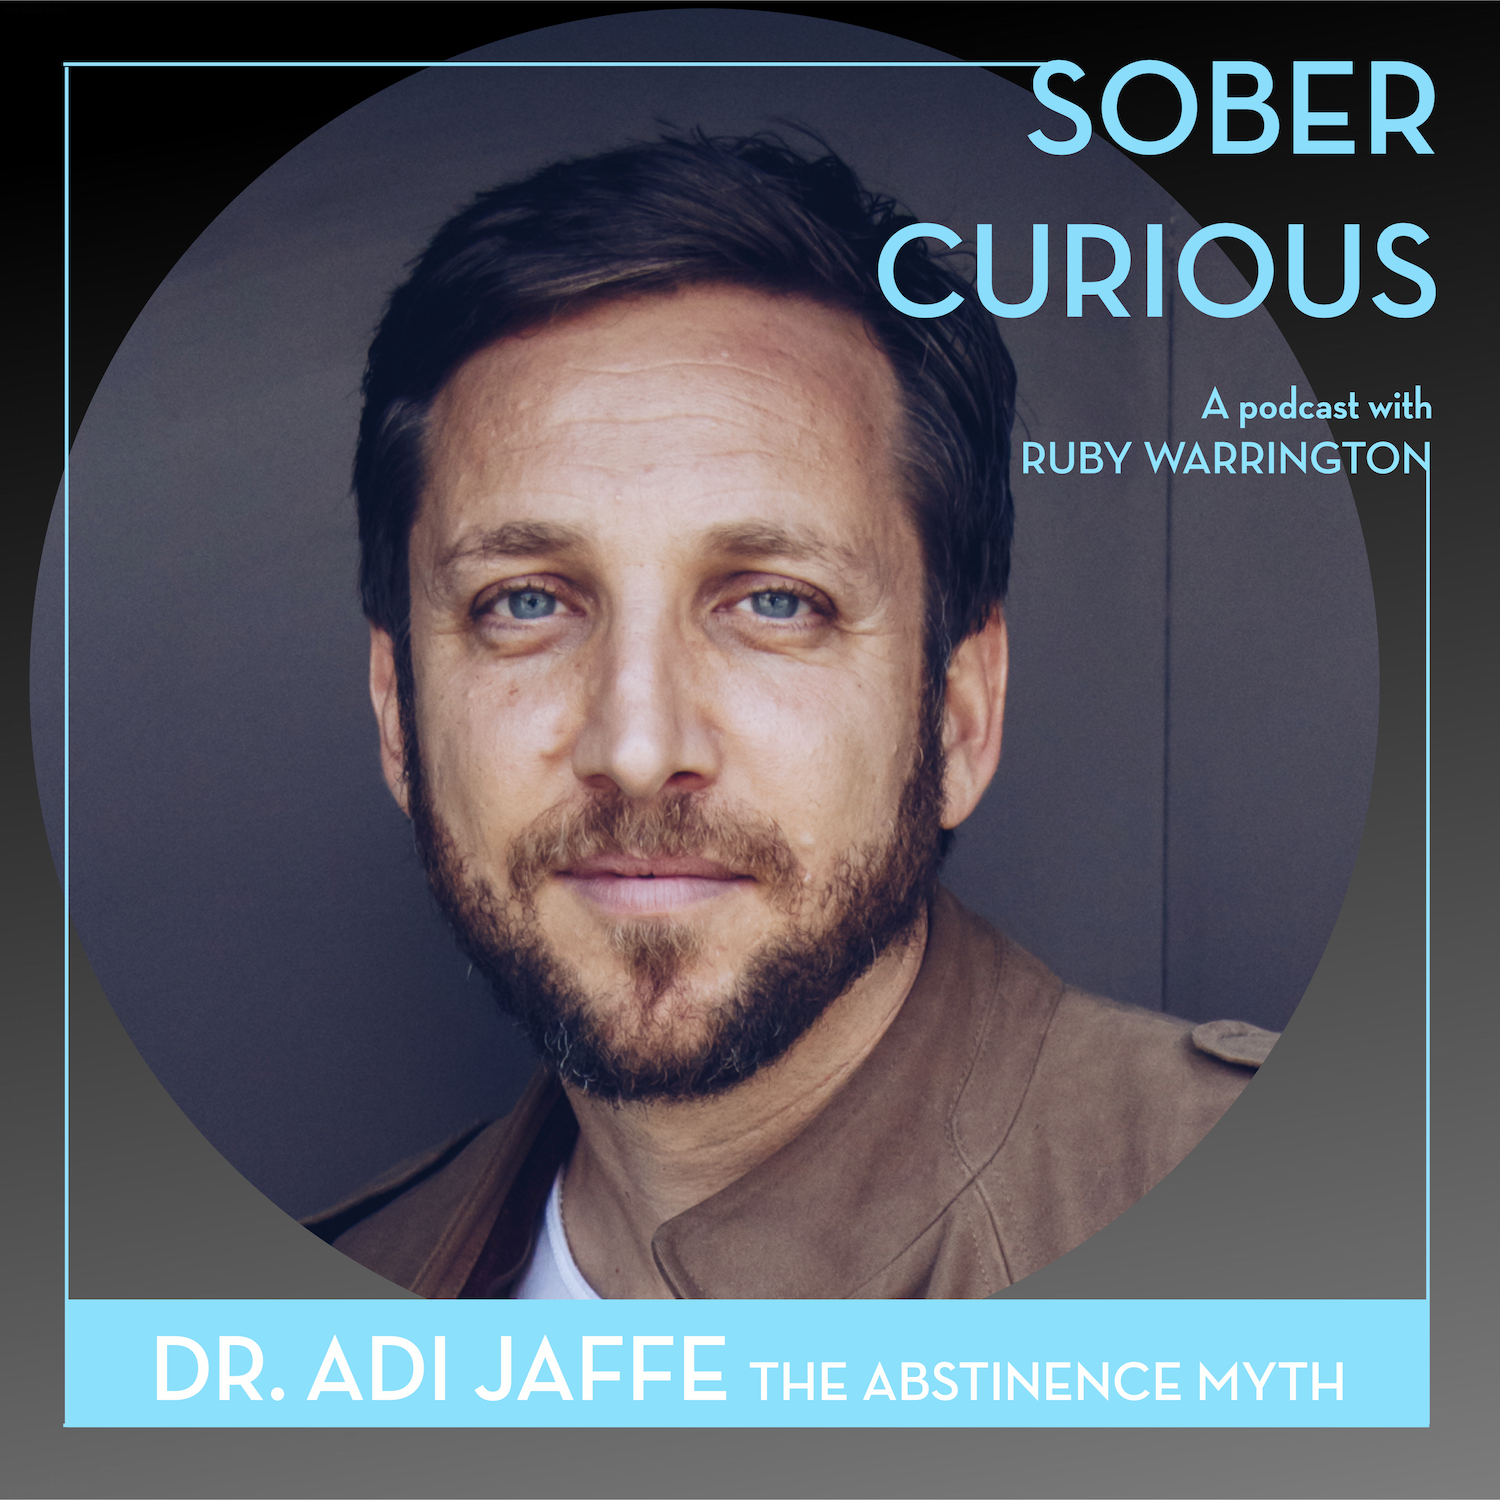 Adi Jaffe sober curious podcast ruby warrington